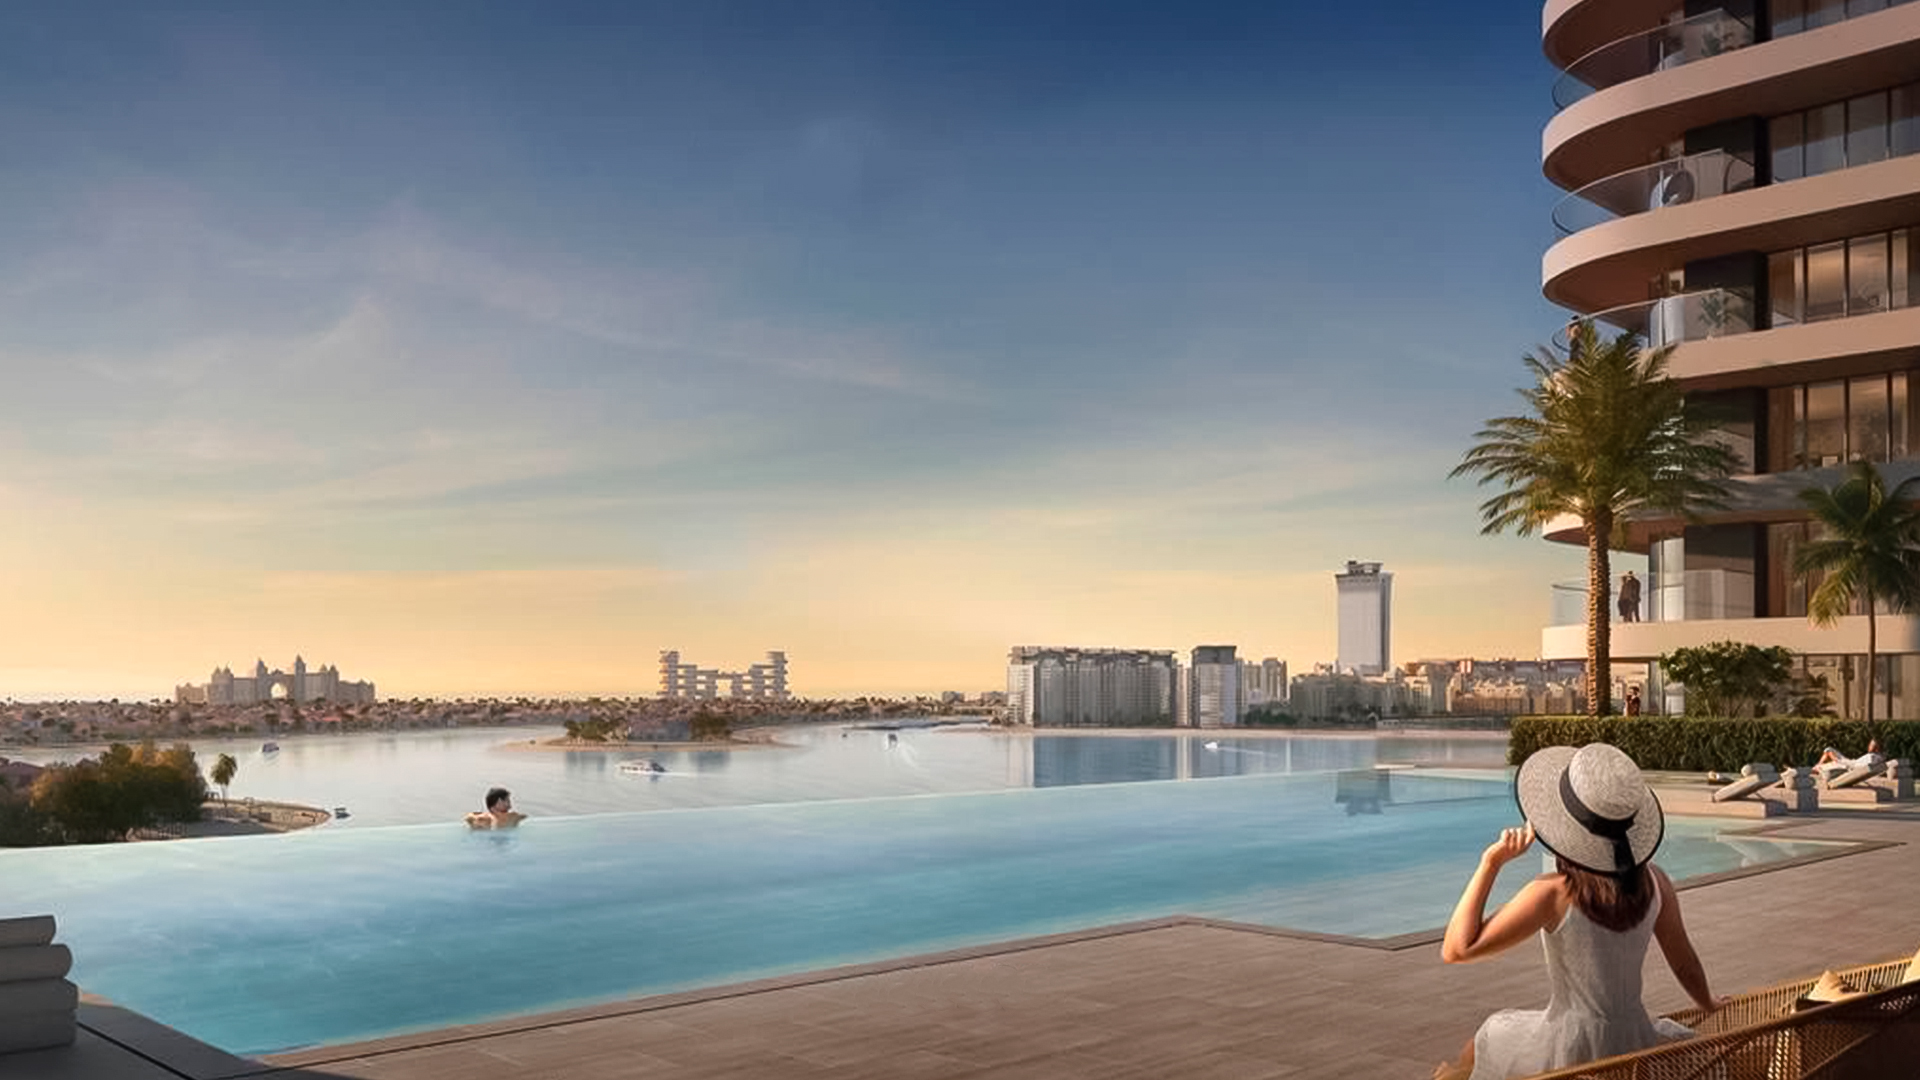 SEAPOINT RESIDENCES от Emaar Properties в Emaar beachfront, Dubai, ОАЭ7